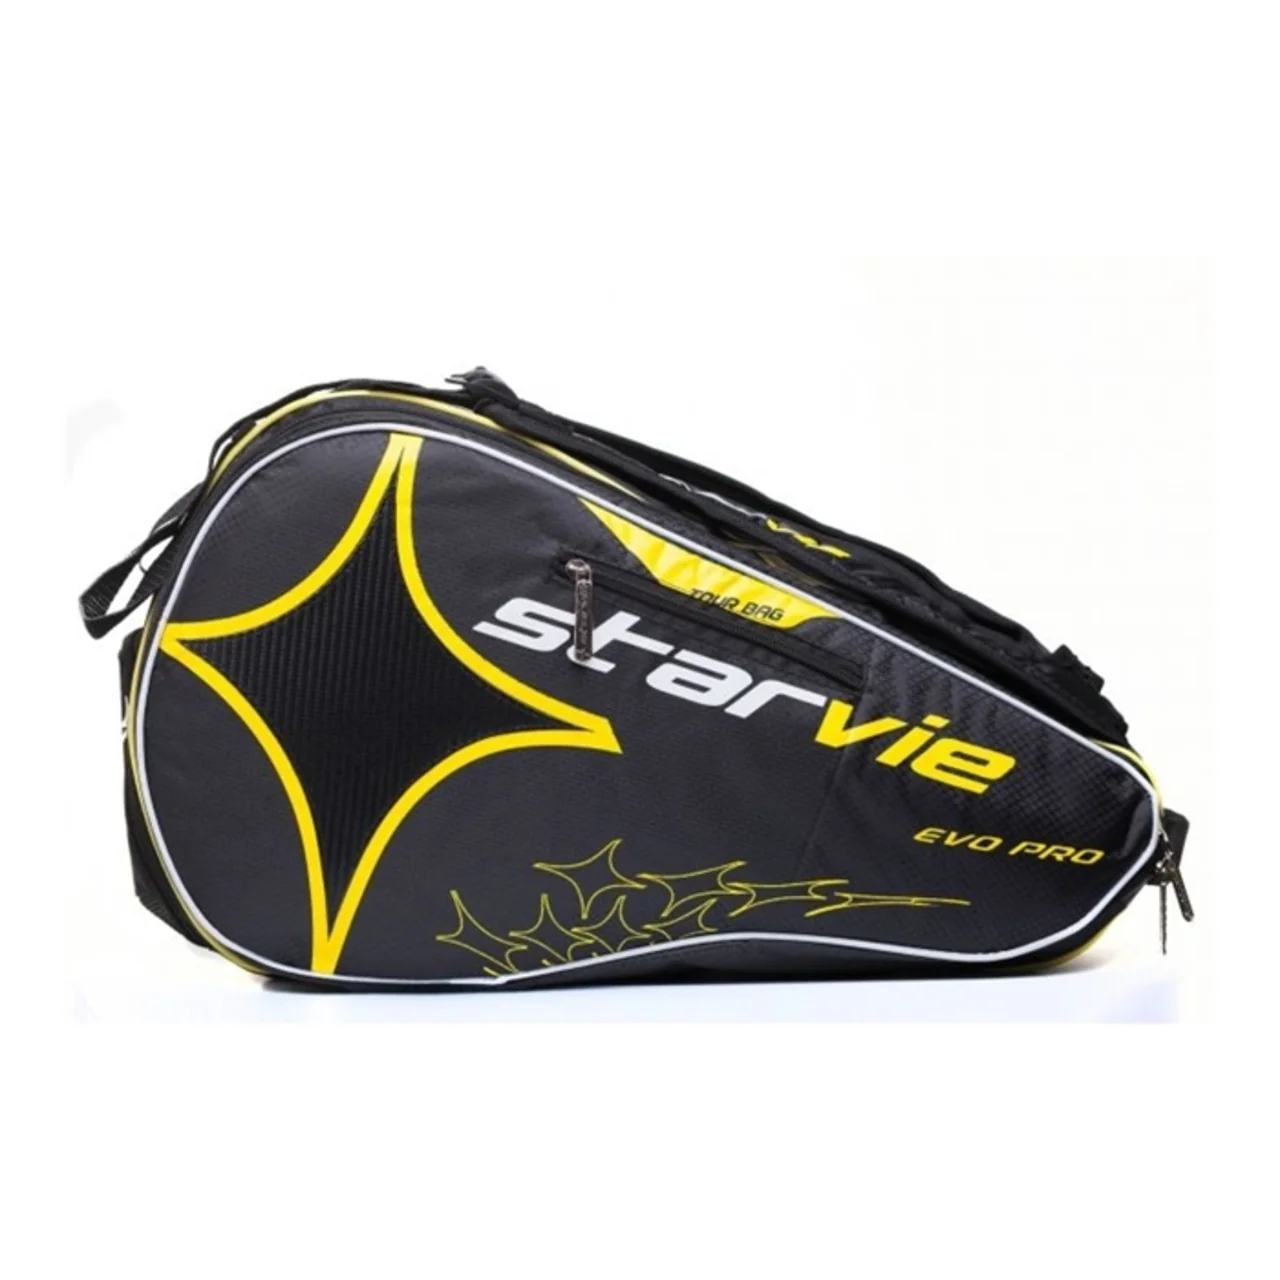 StarVie Paletero Pro Yellow Padel Bag